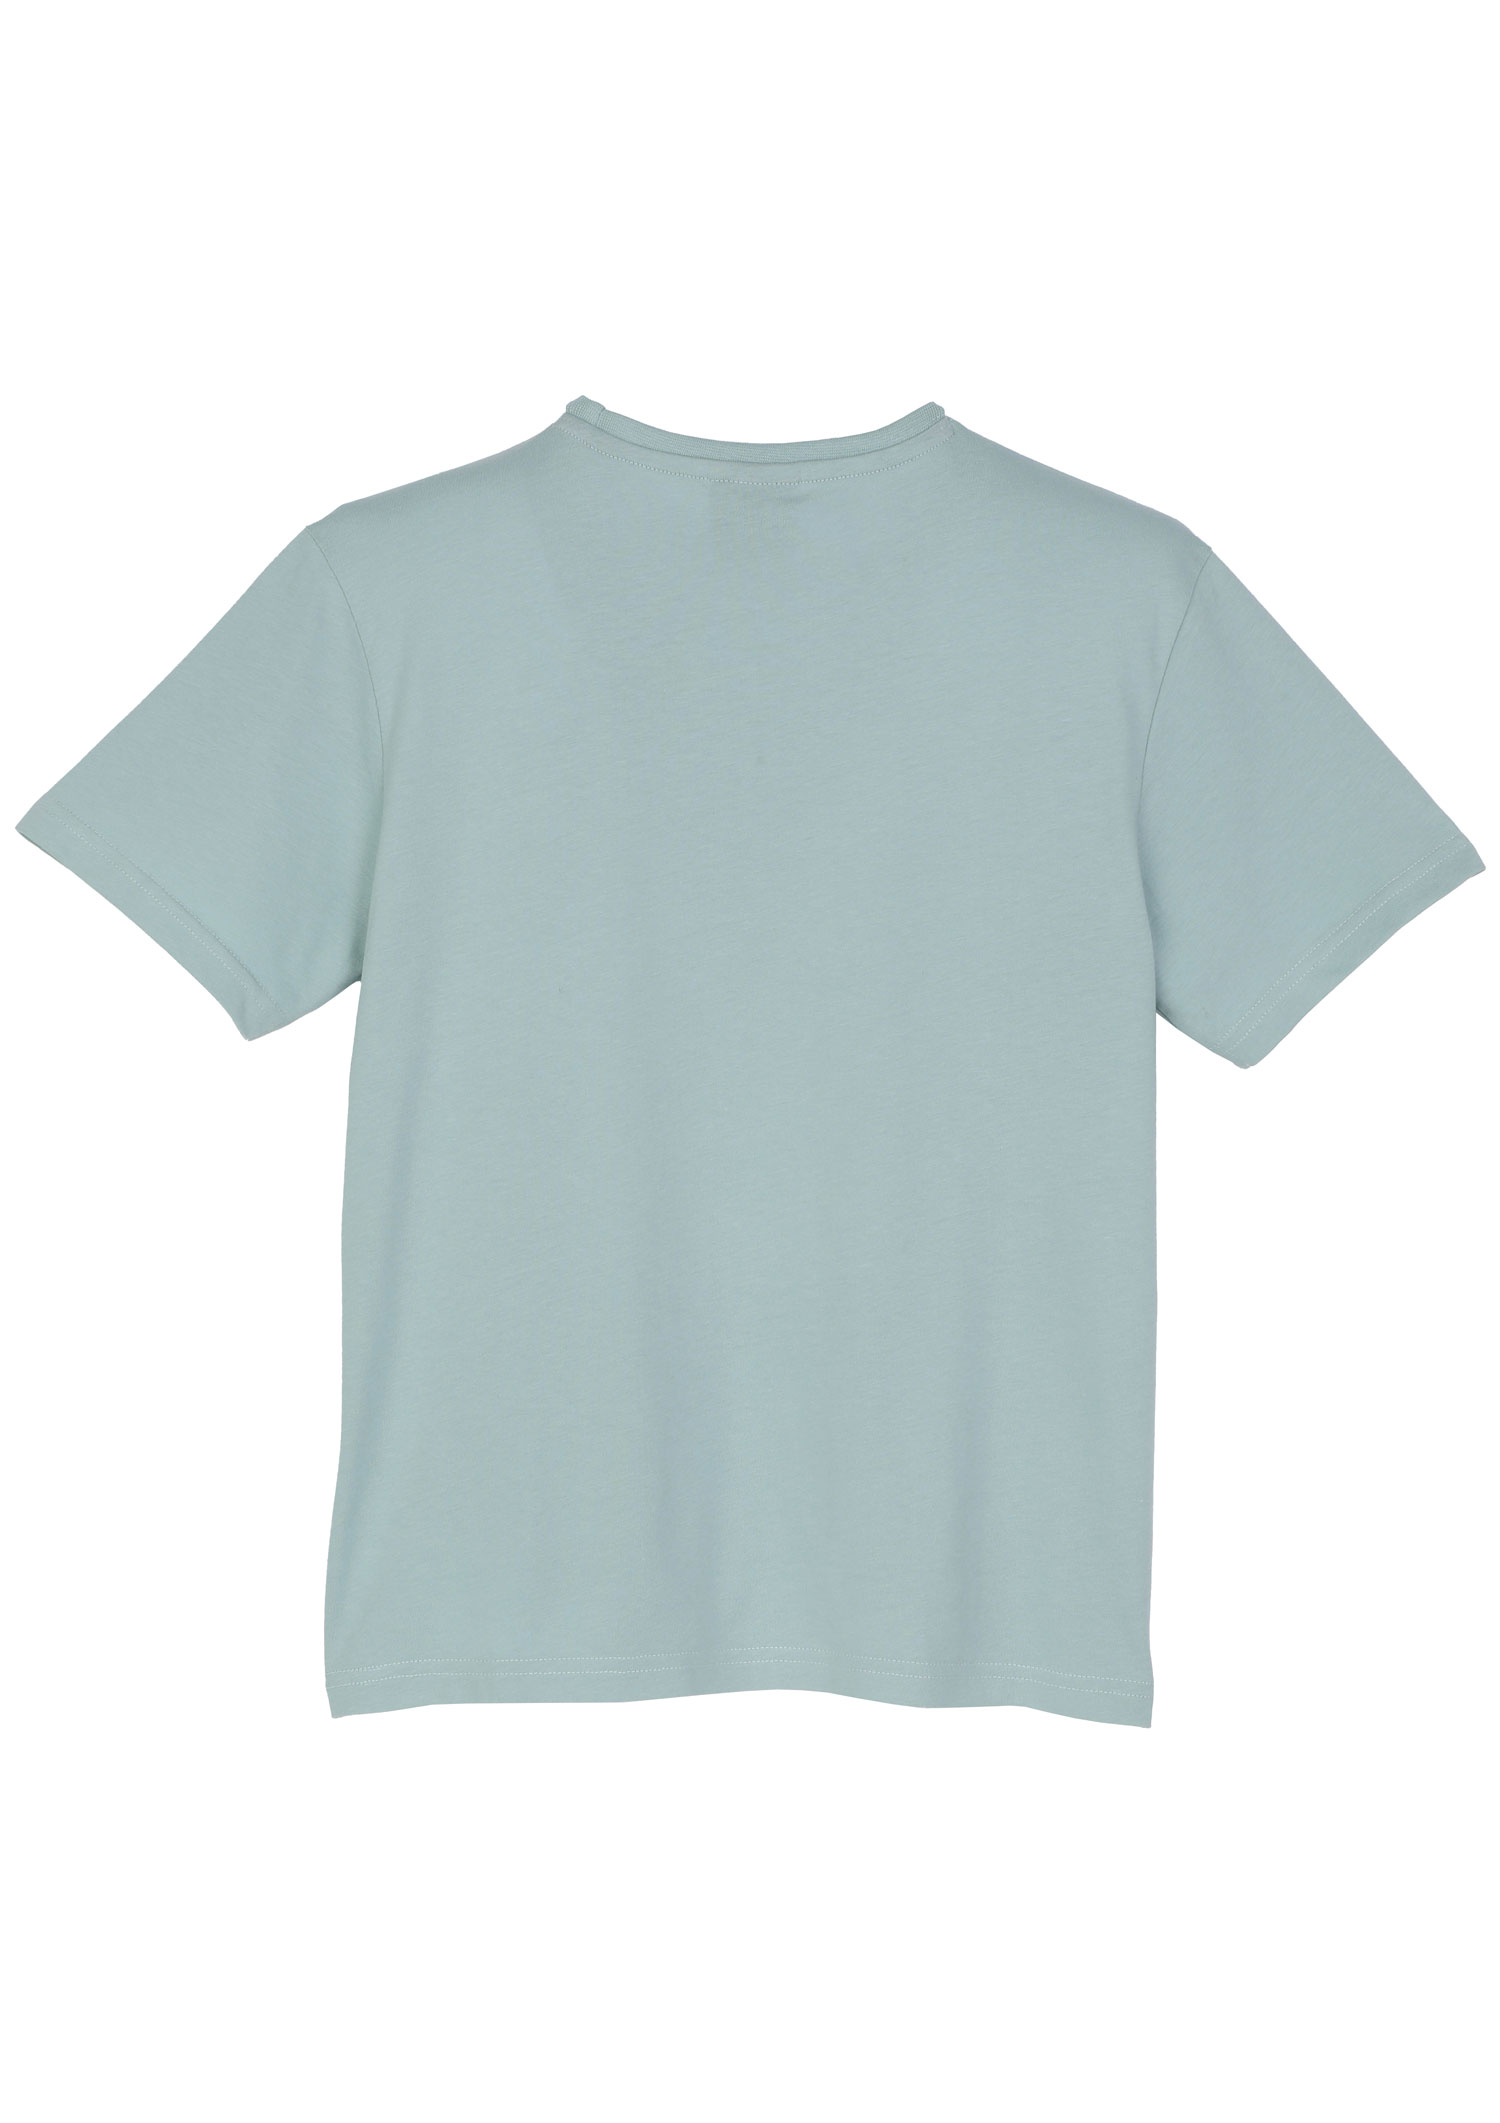 Kinder T-Shirt "Totenkopf Regenbogen" mint